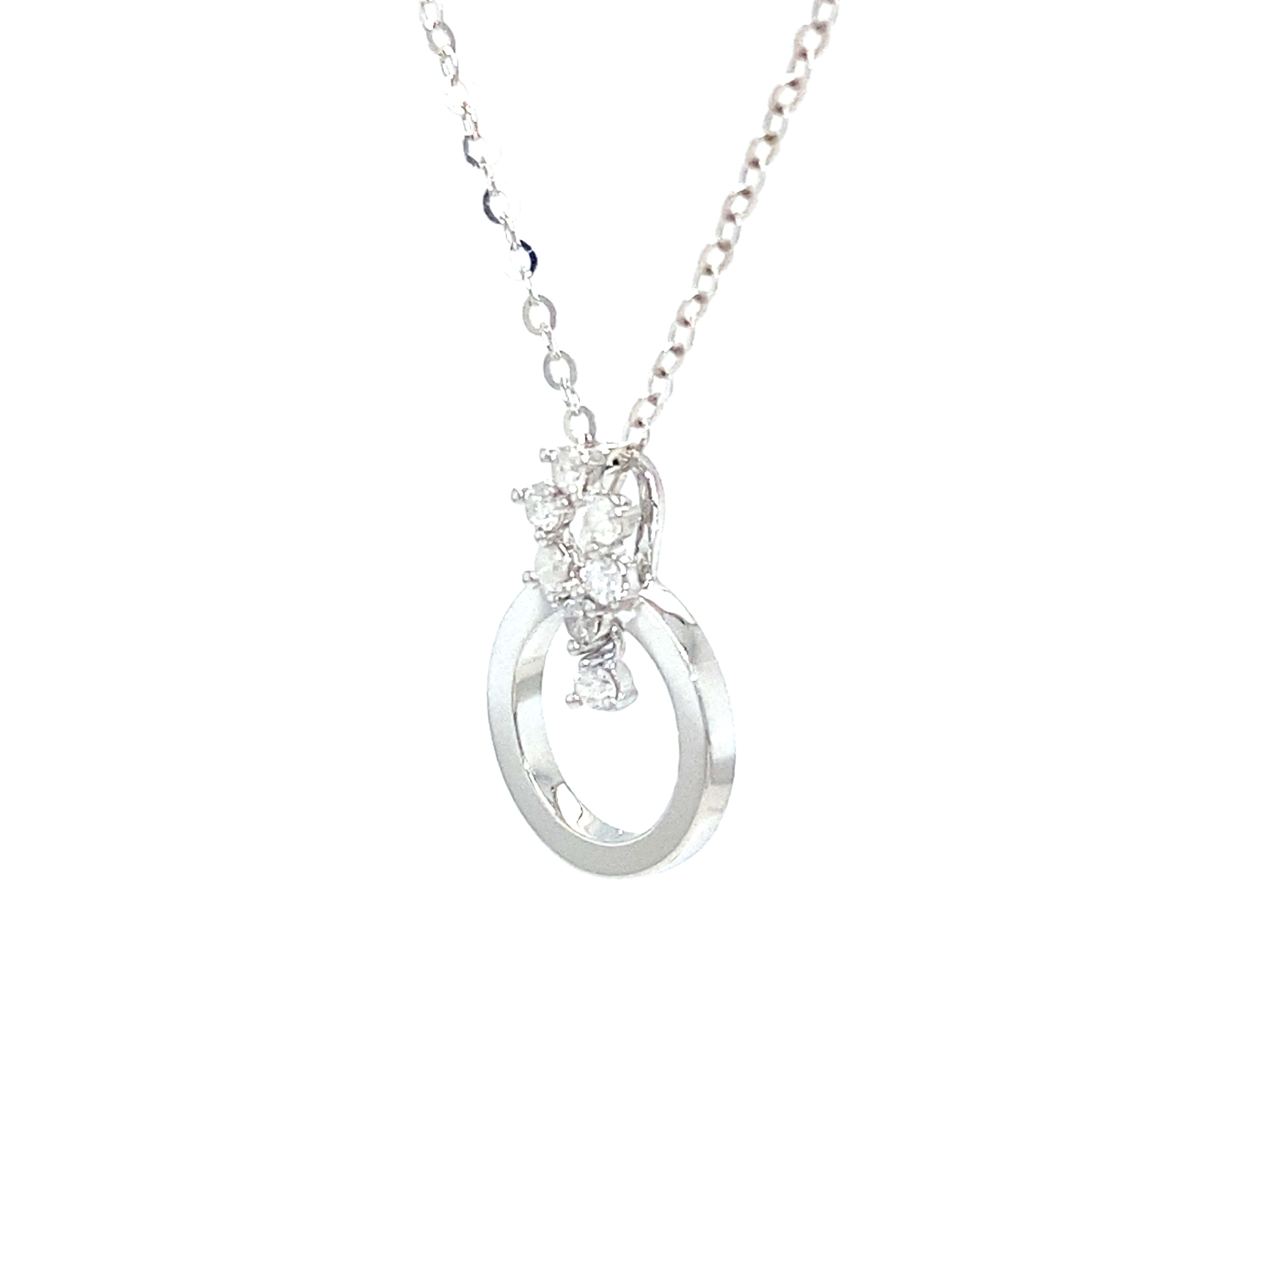 18K White Gold Circle Deco Diamond Necklace